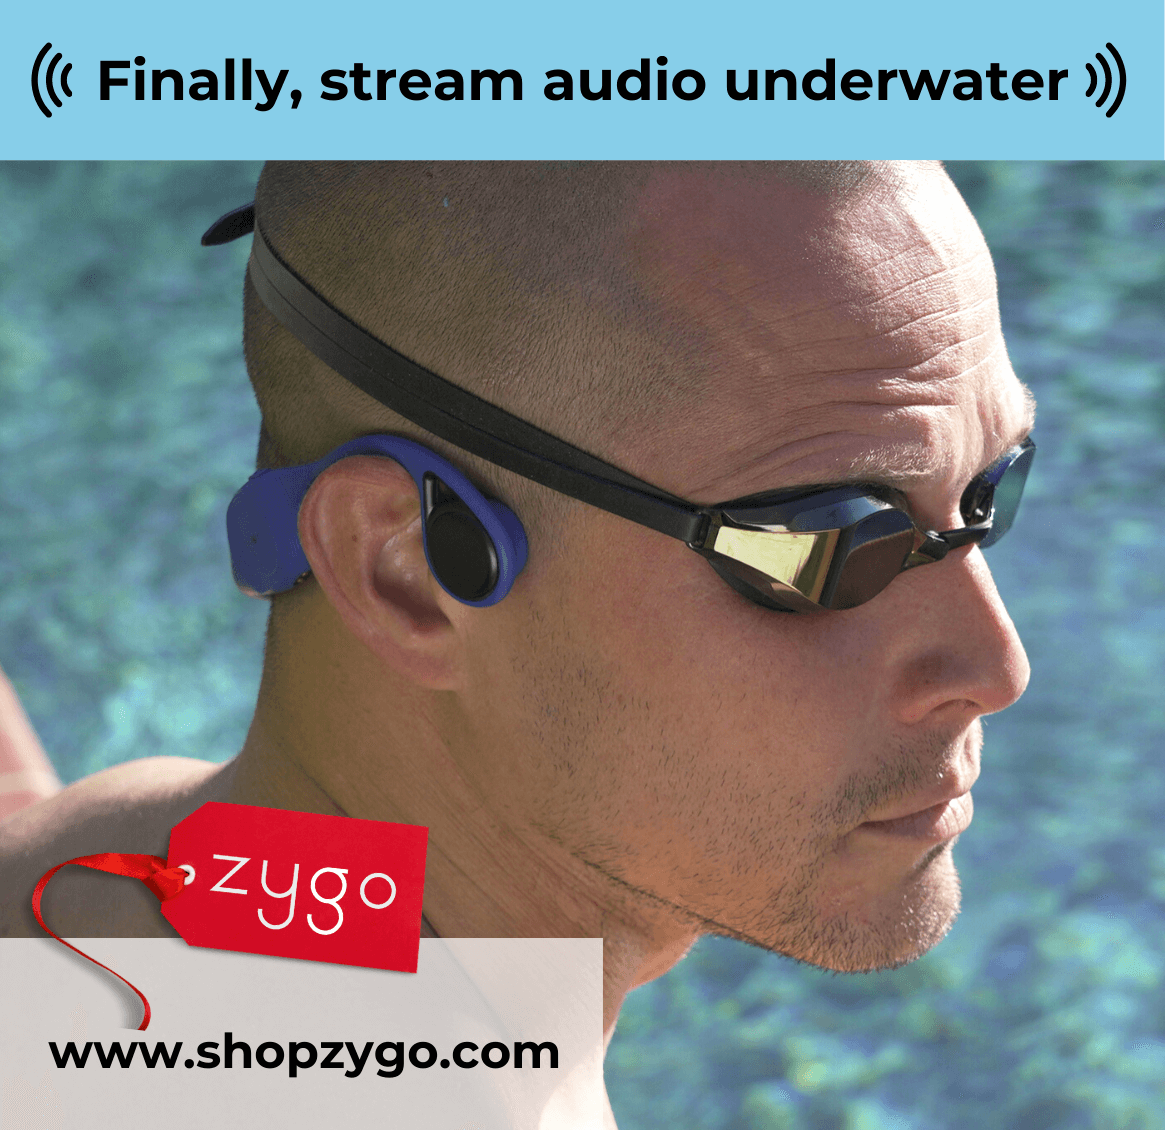 Zygo stream audio underwater ad